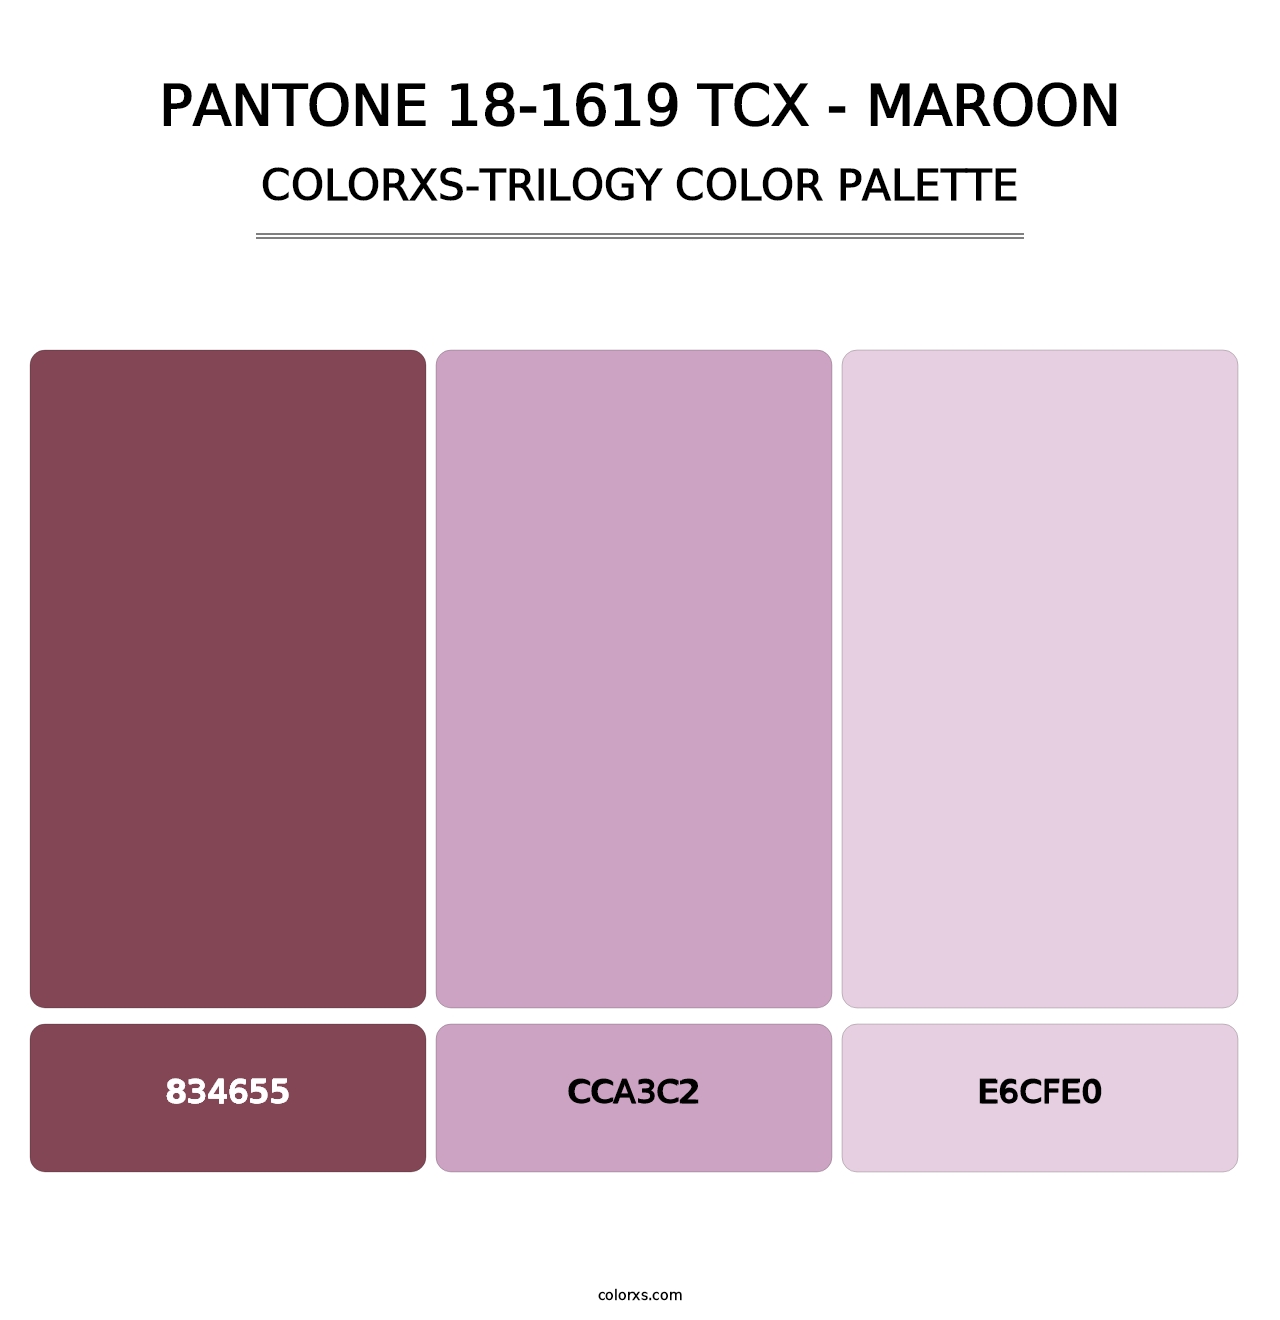 PANTONE 18-1619 TCX - Maroon - Colorxs Trilogy Palette